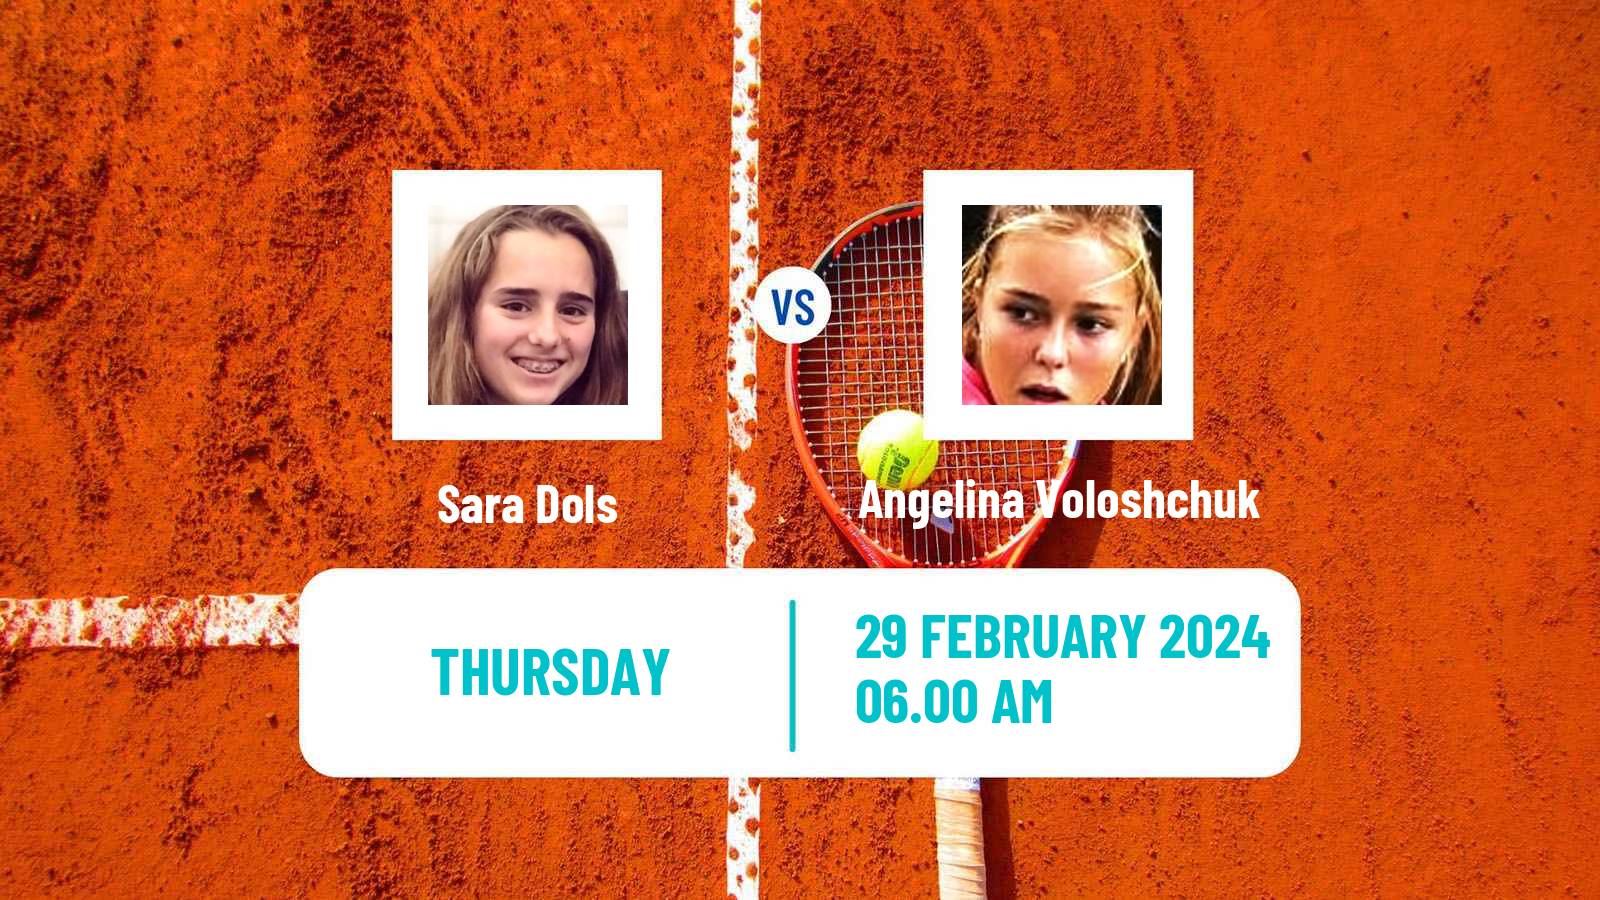 Tennis ITF W15 Manacor 3 Women Sara Dols - Angelina Voloshchuk